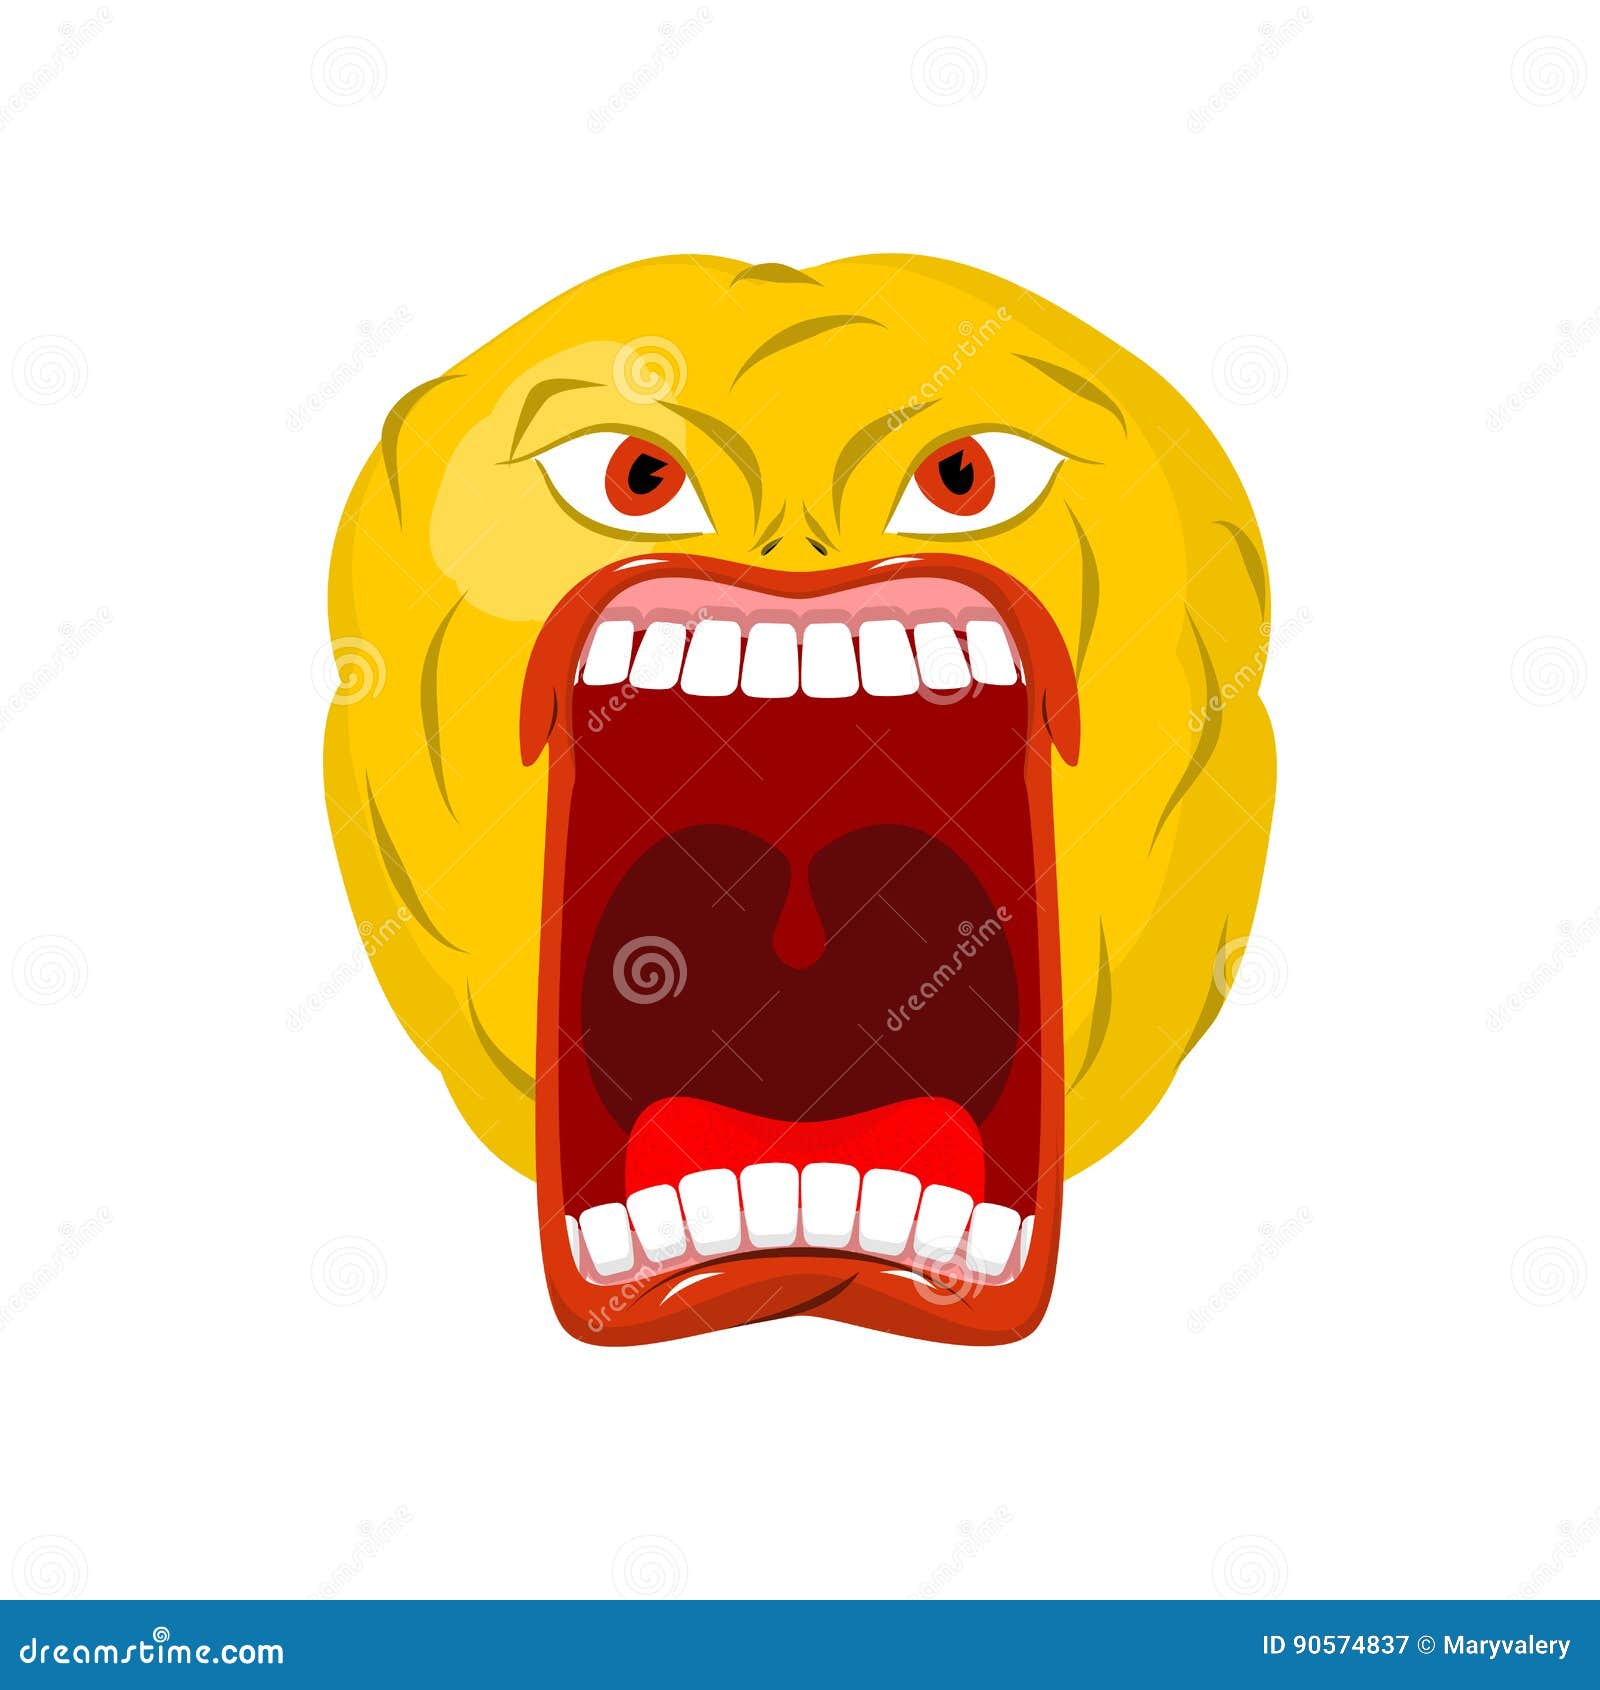 Crazy Emoji Emoticon Character Vector Illustration | CartoonDealer.com #72132962